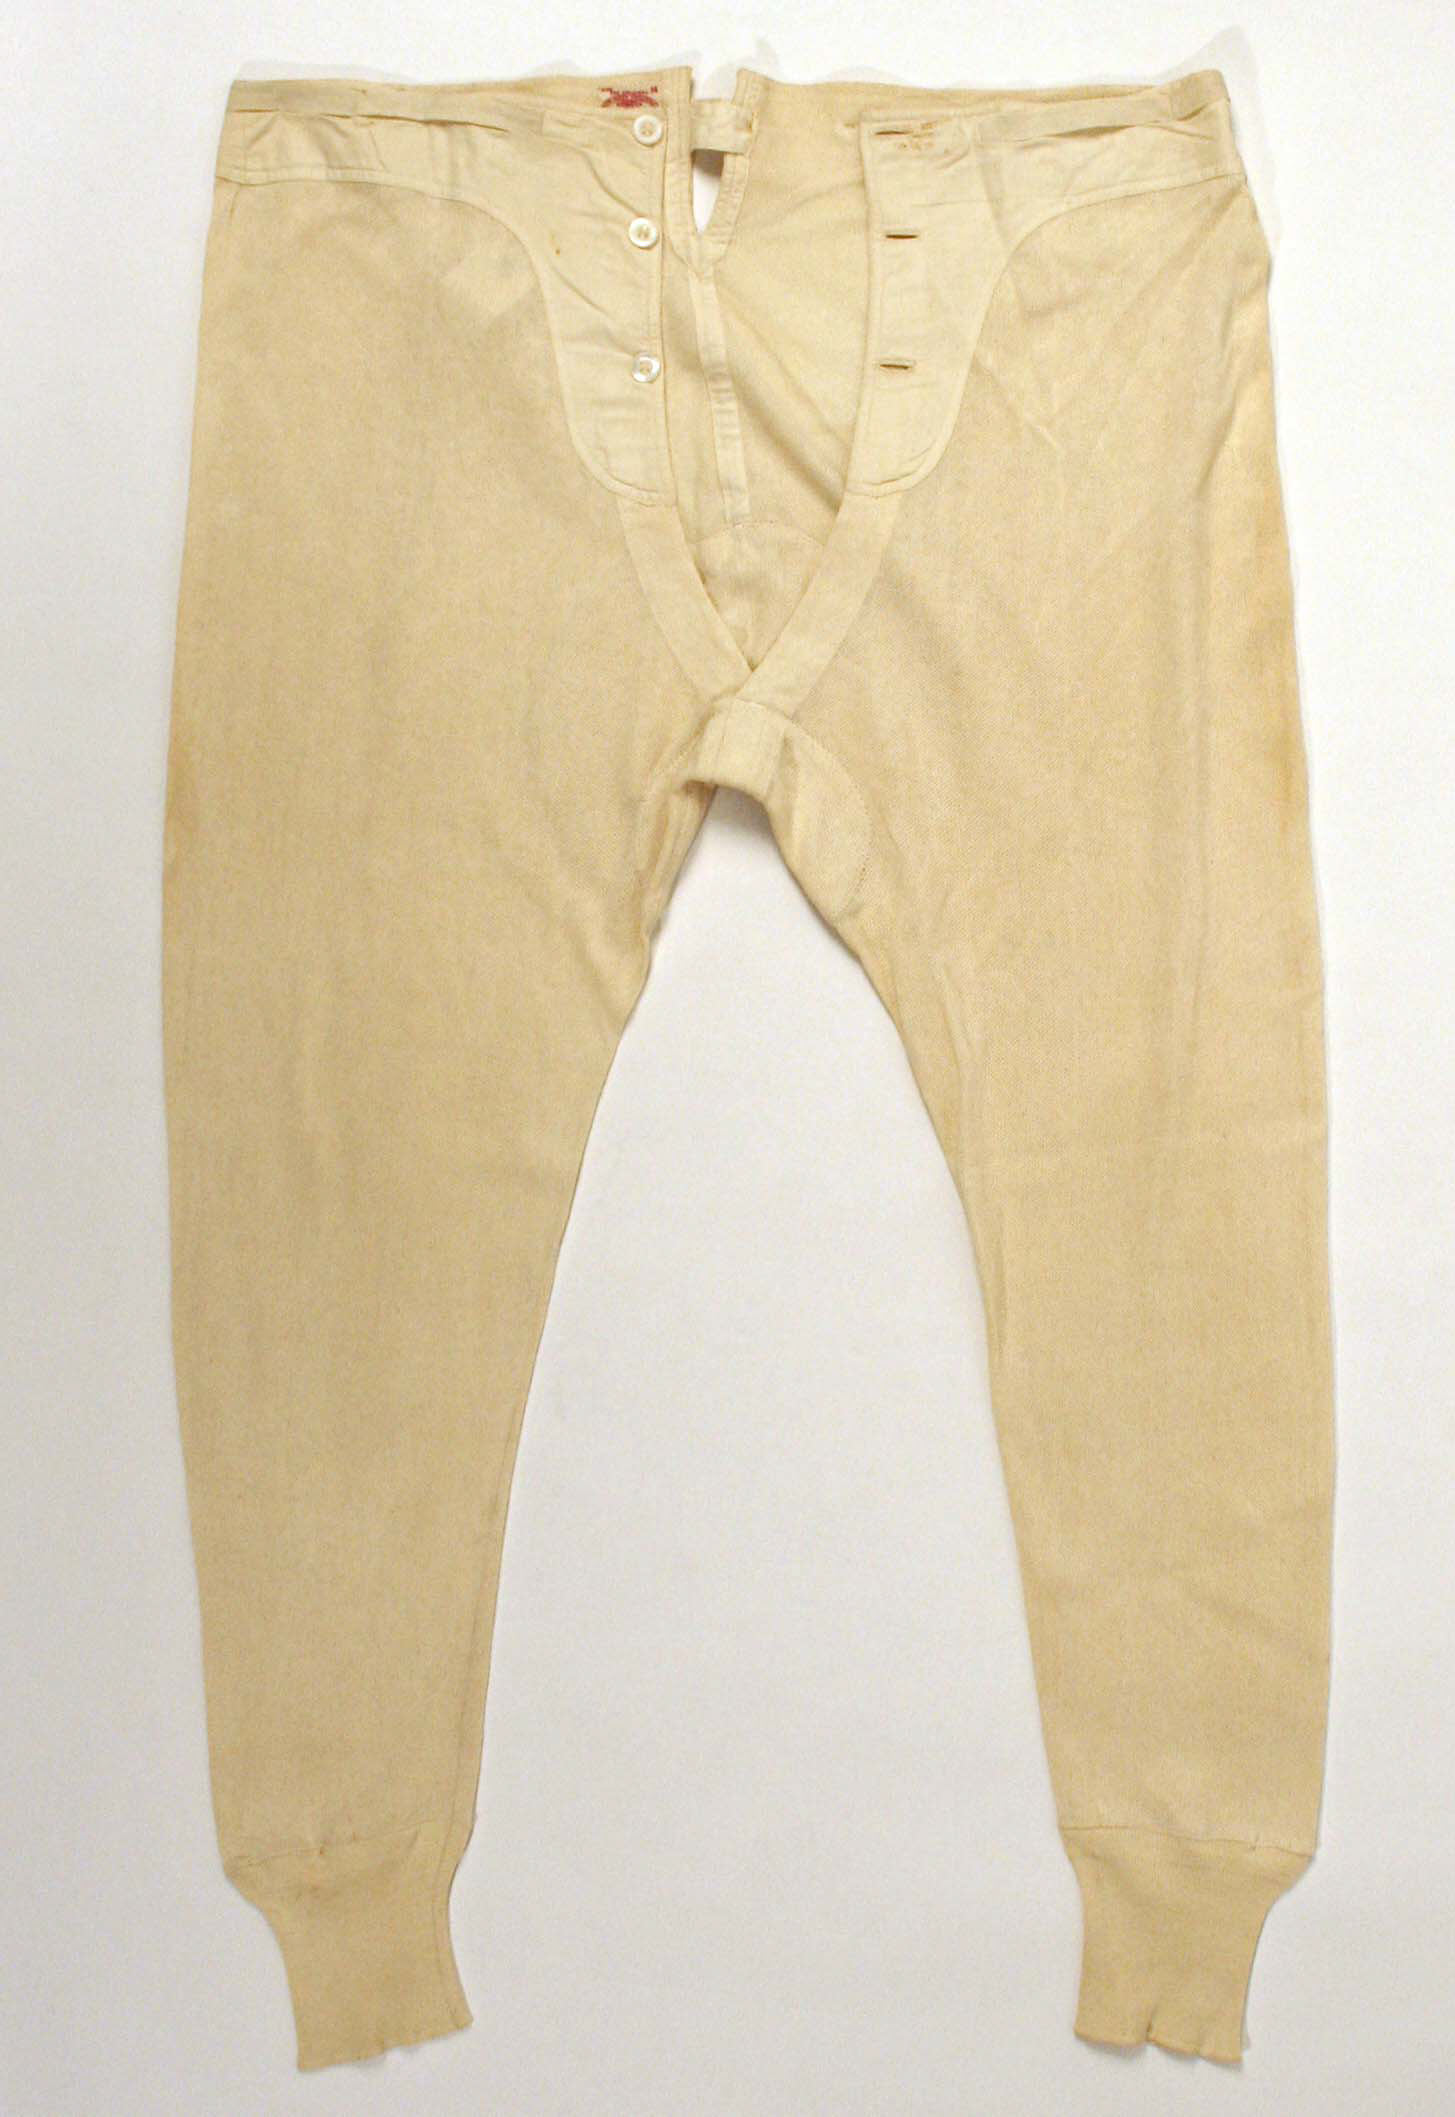 Underwear | German | The Metropolitan Museum of Art